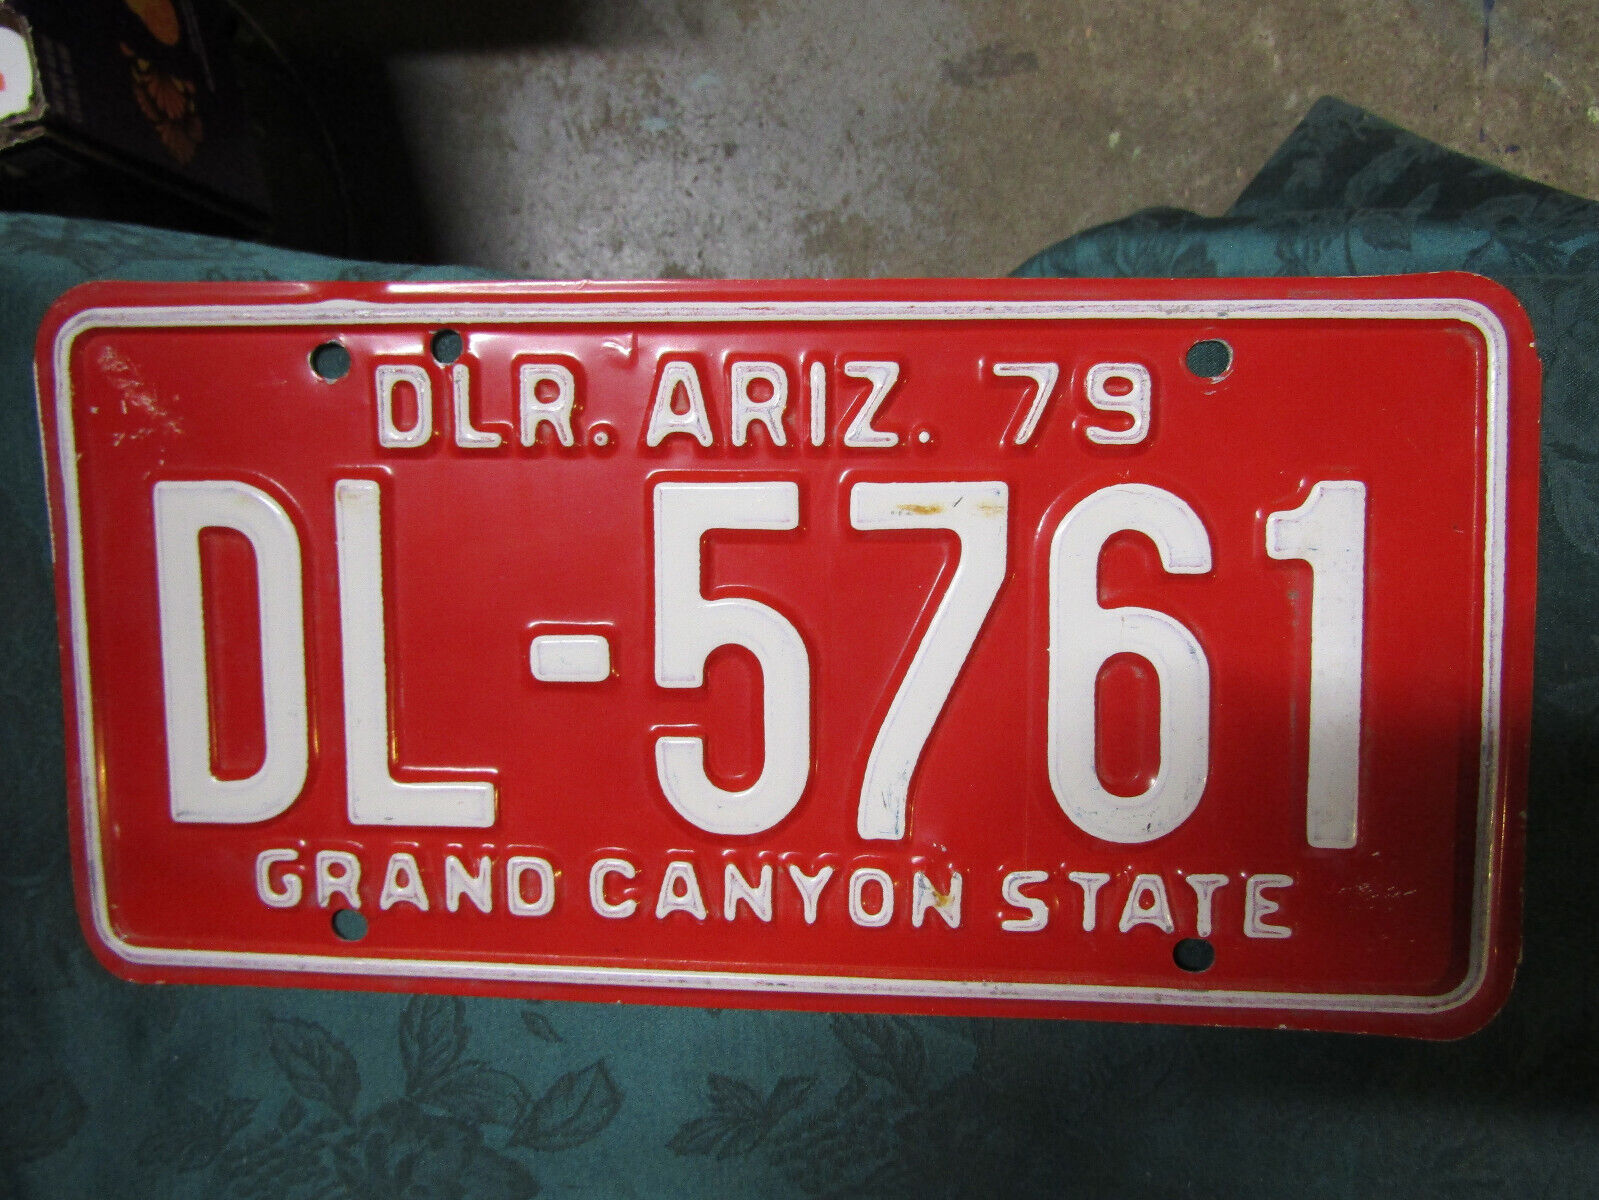 1979 Arizona Dealer License Plate DL-5761, Auto Car Dealership Phoenix Flagstaff